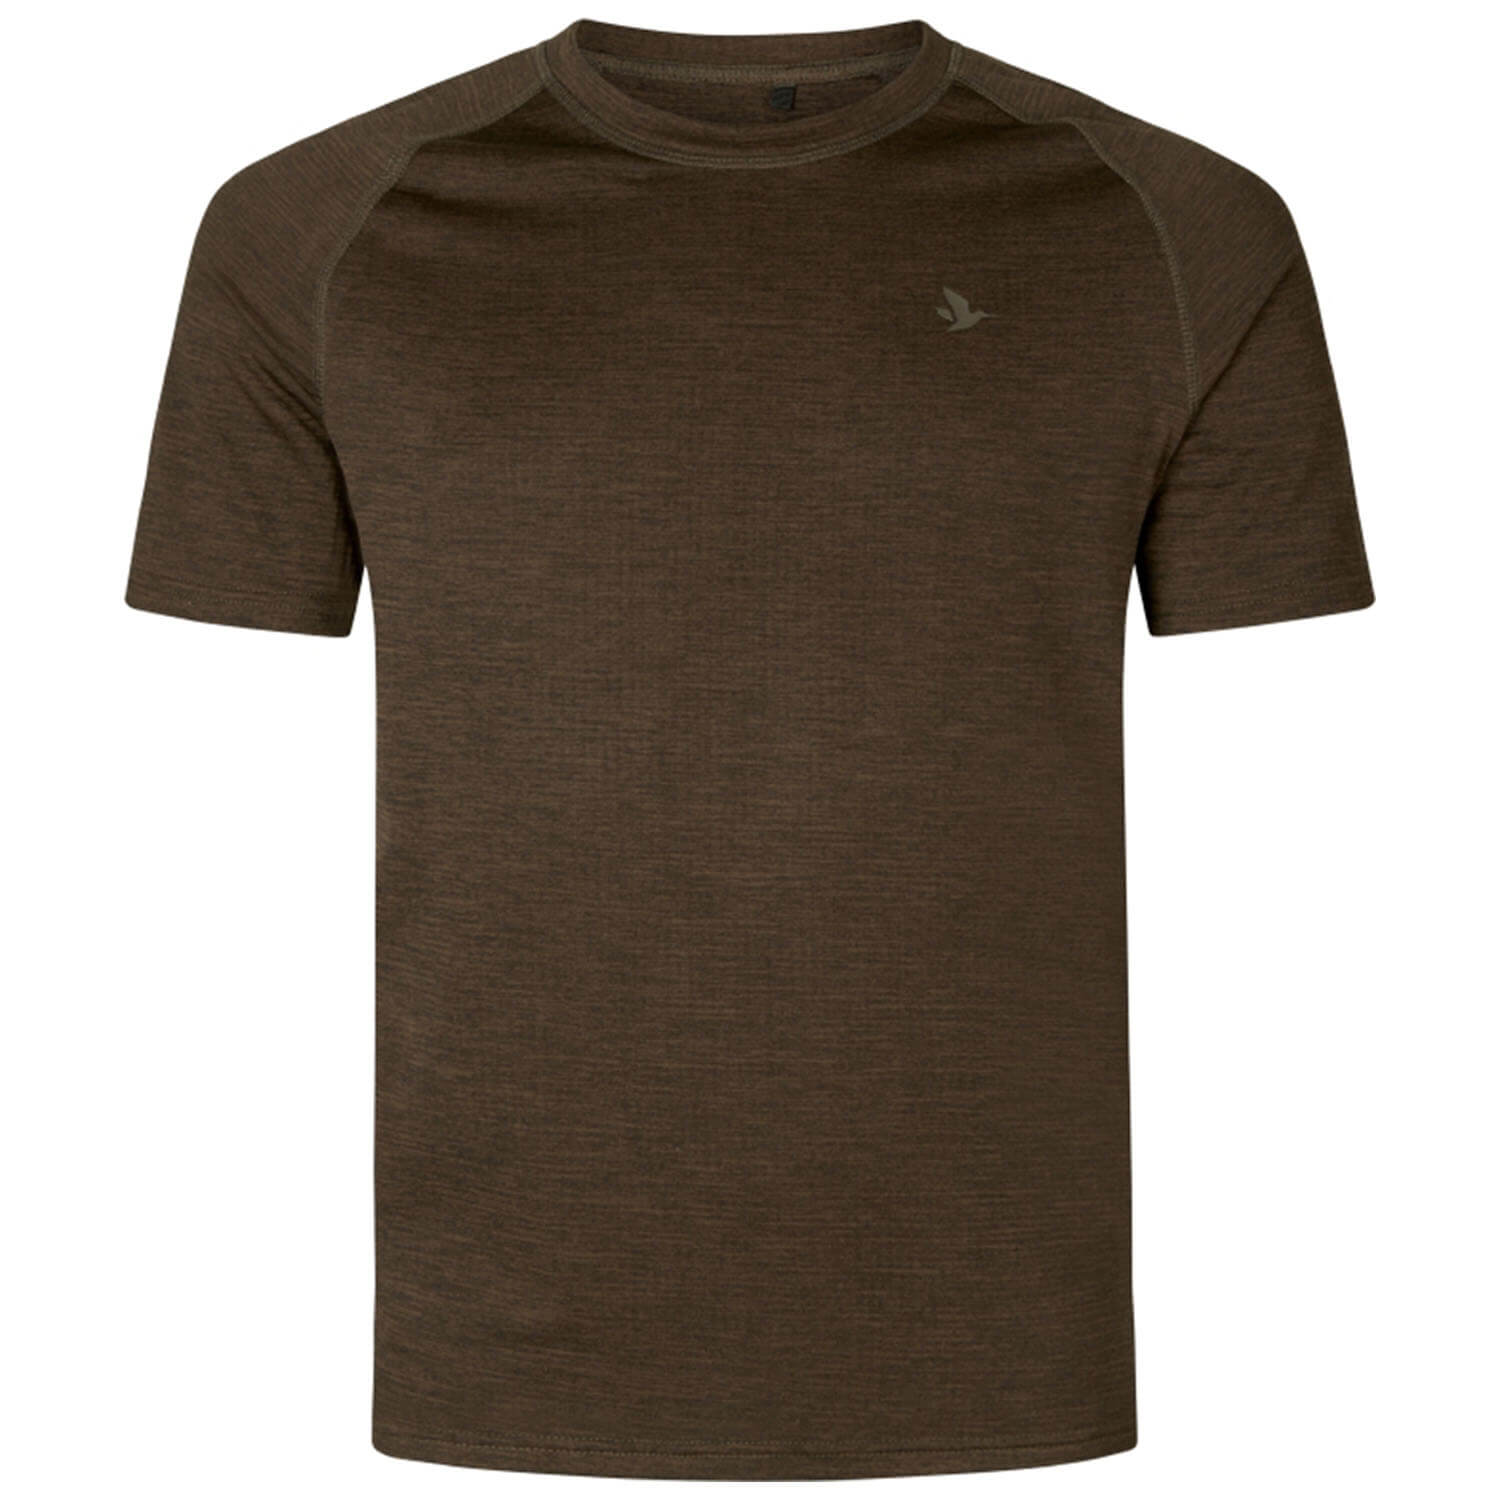 Seeland T-shirt Active (demitasse brown) - Shirts